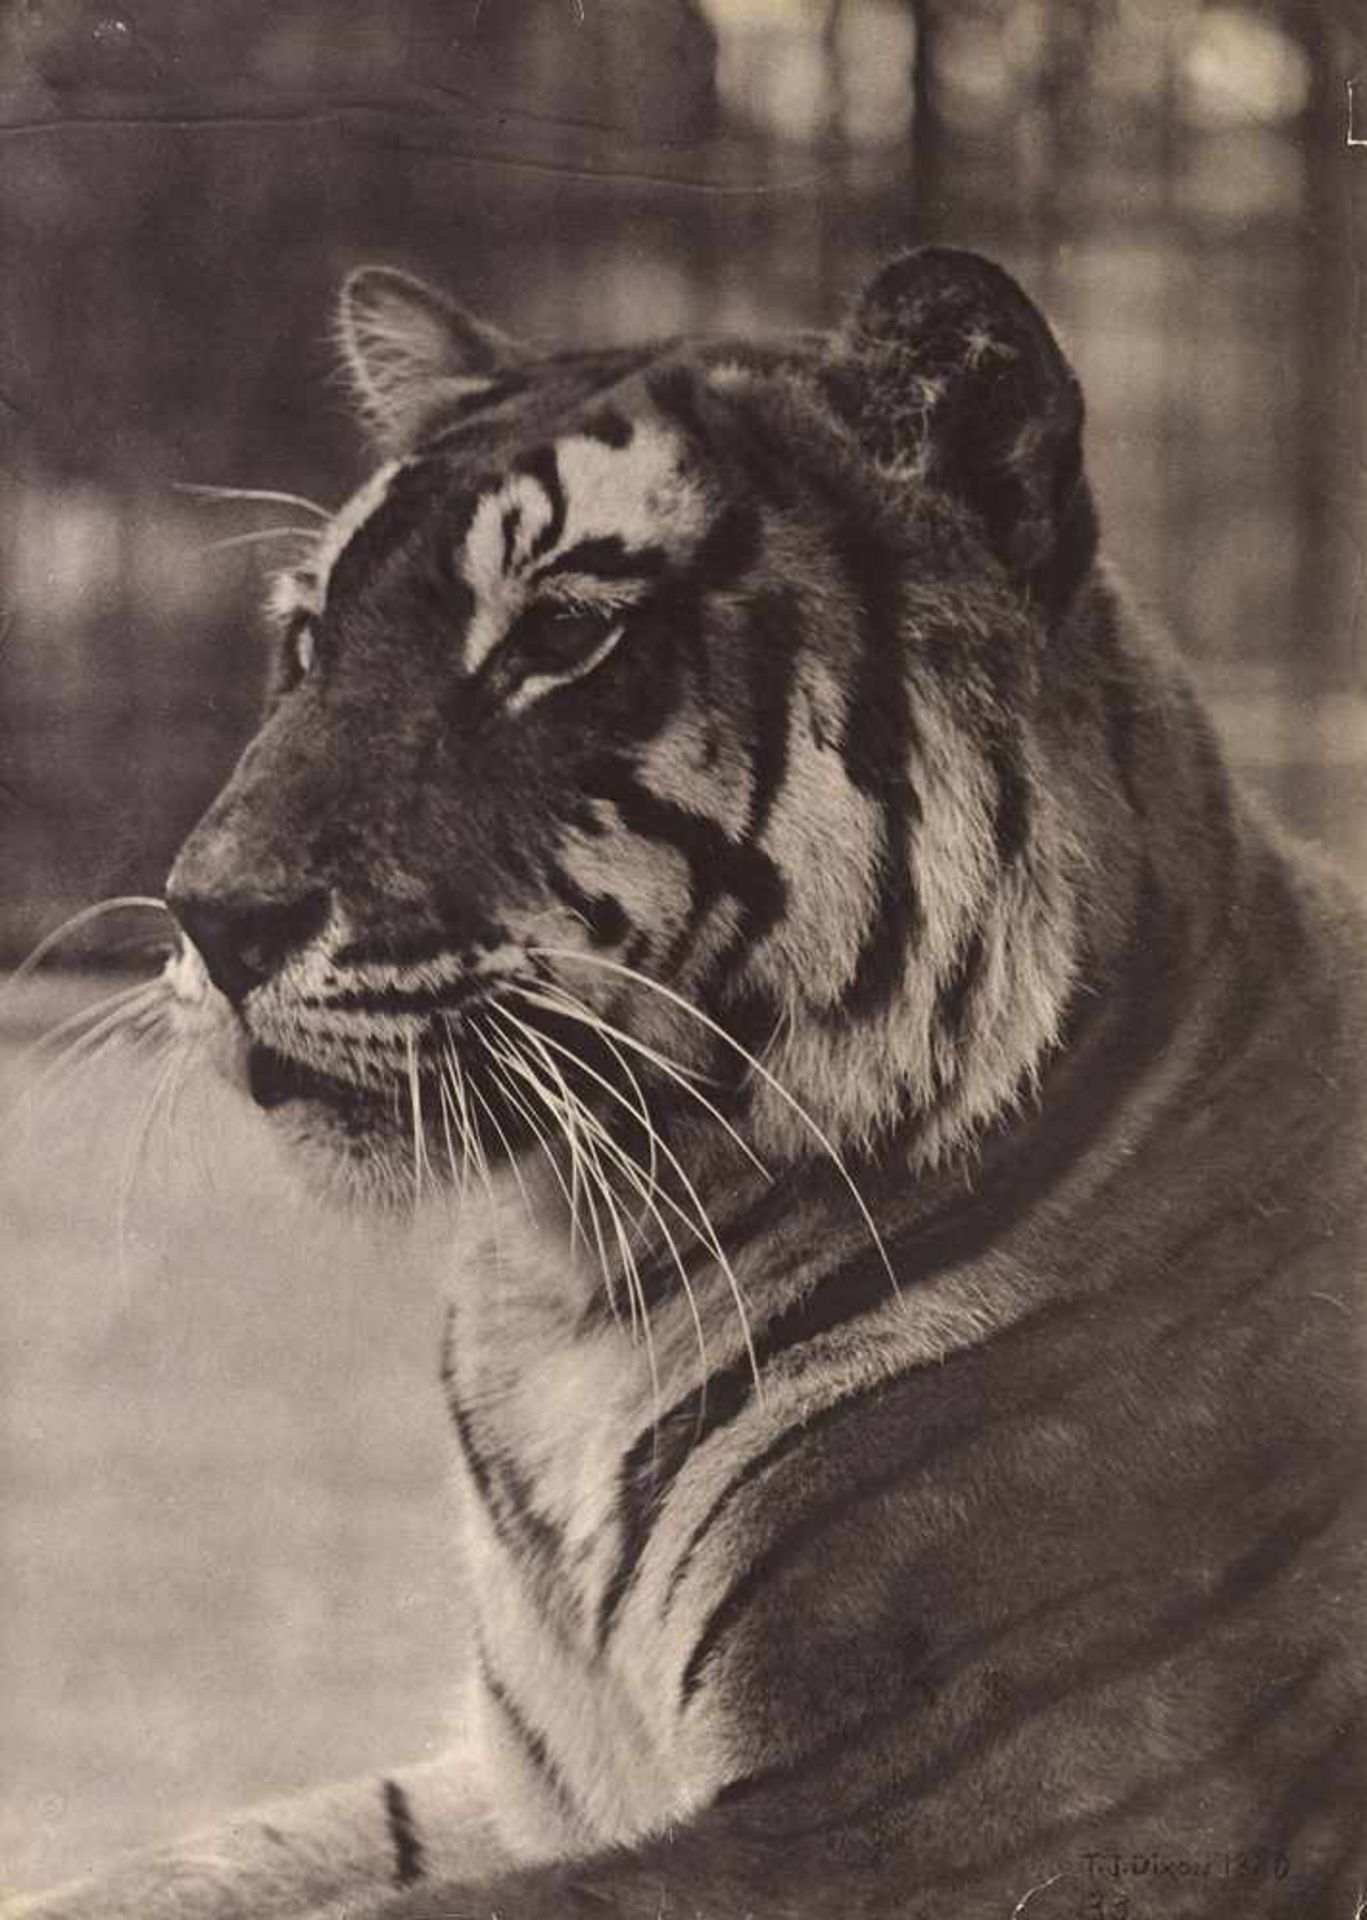 Dixon, Thomas J.: Tiger Tiger. 1880. Vintage carbon print. 35 x 25,4 cm. Photographer's name, year